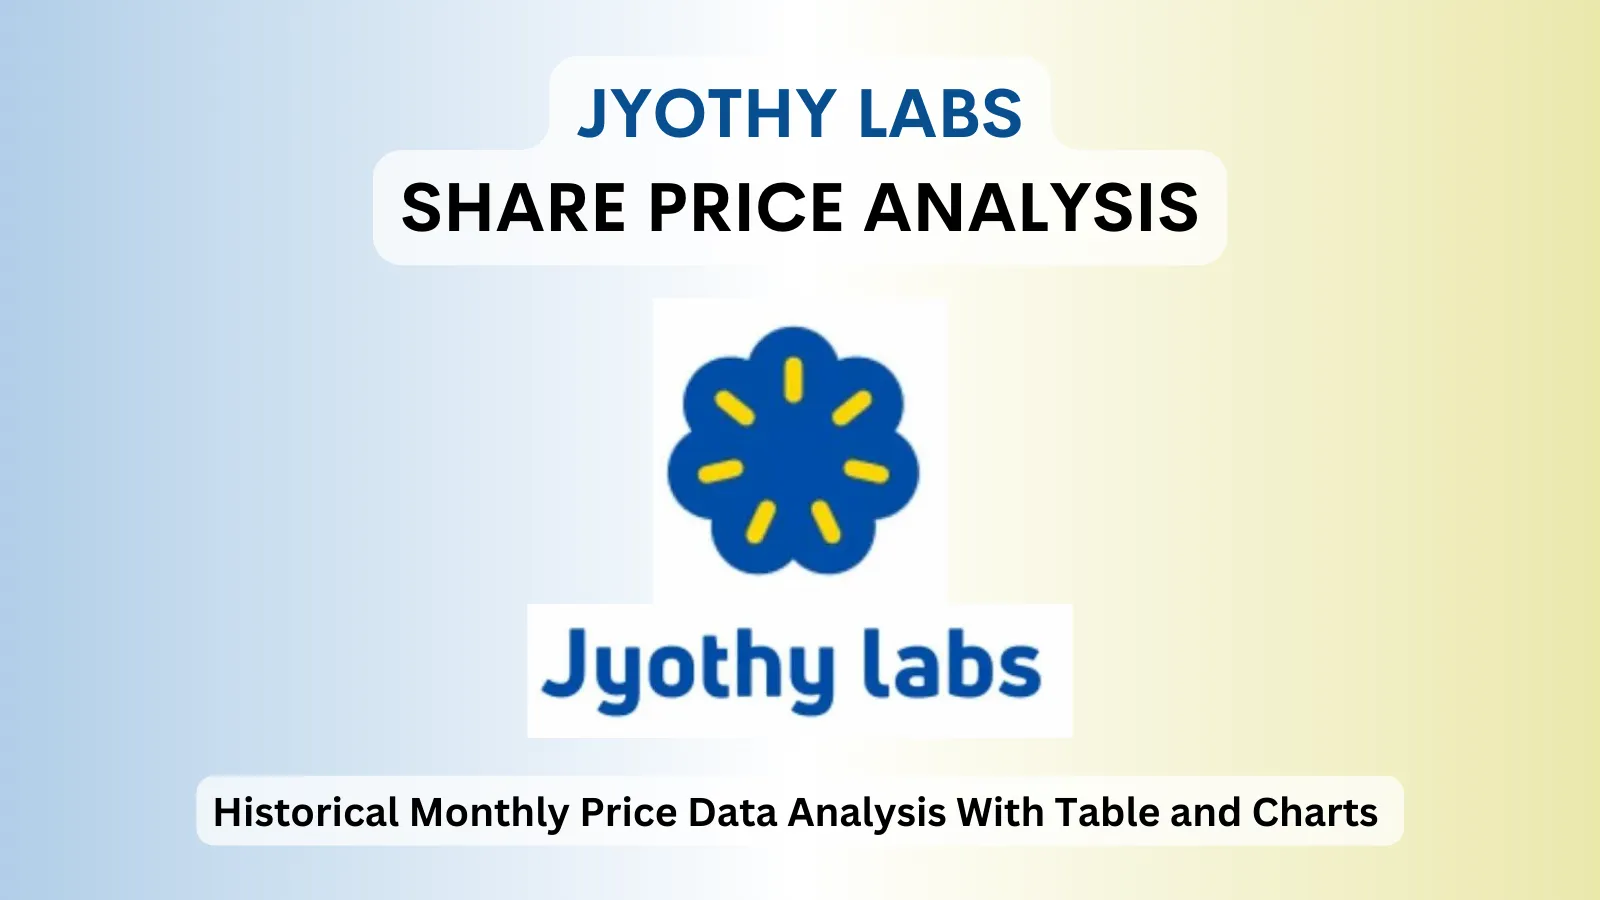 Jyothy Labs share price analysis